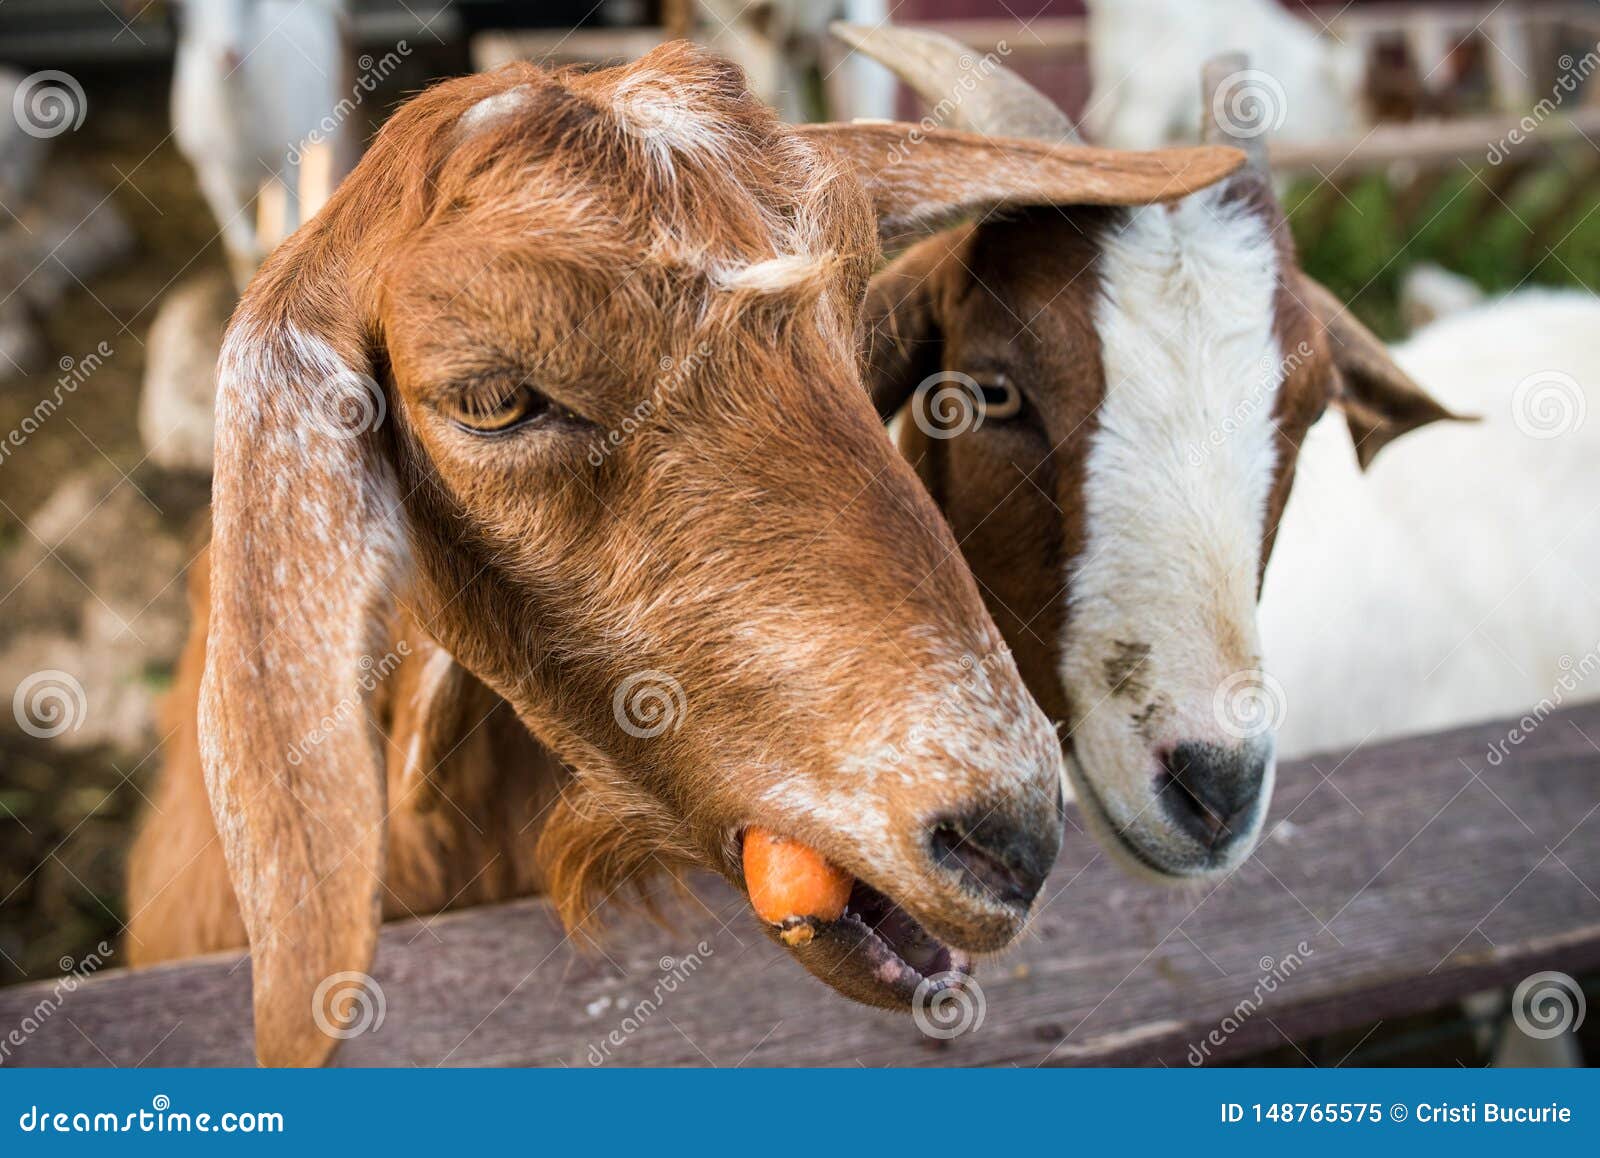 goats eating carrots